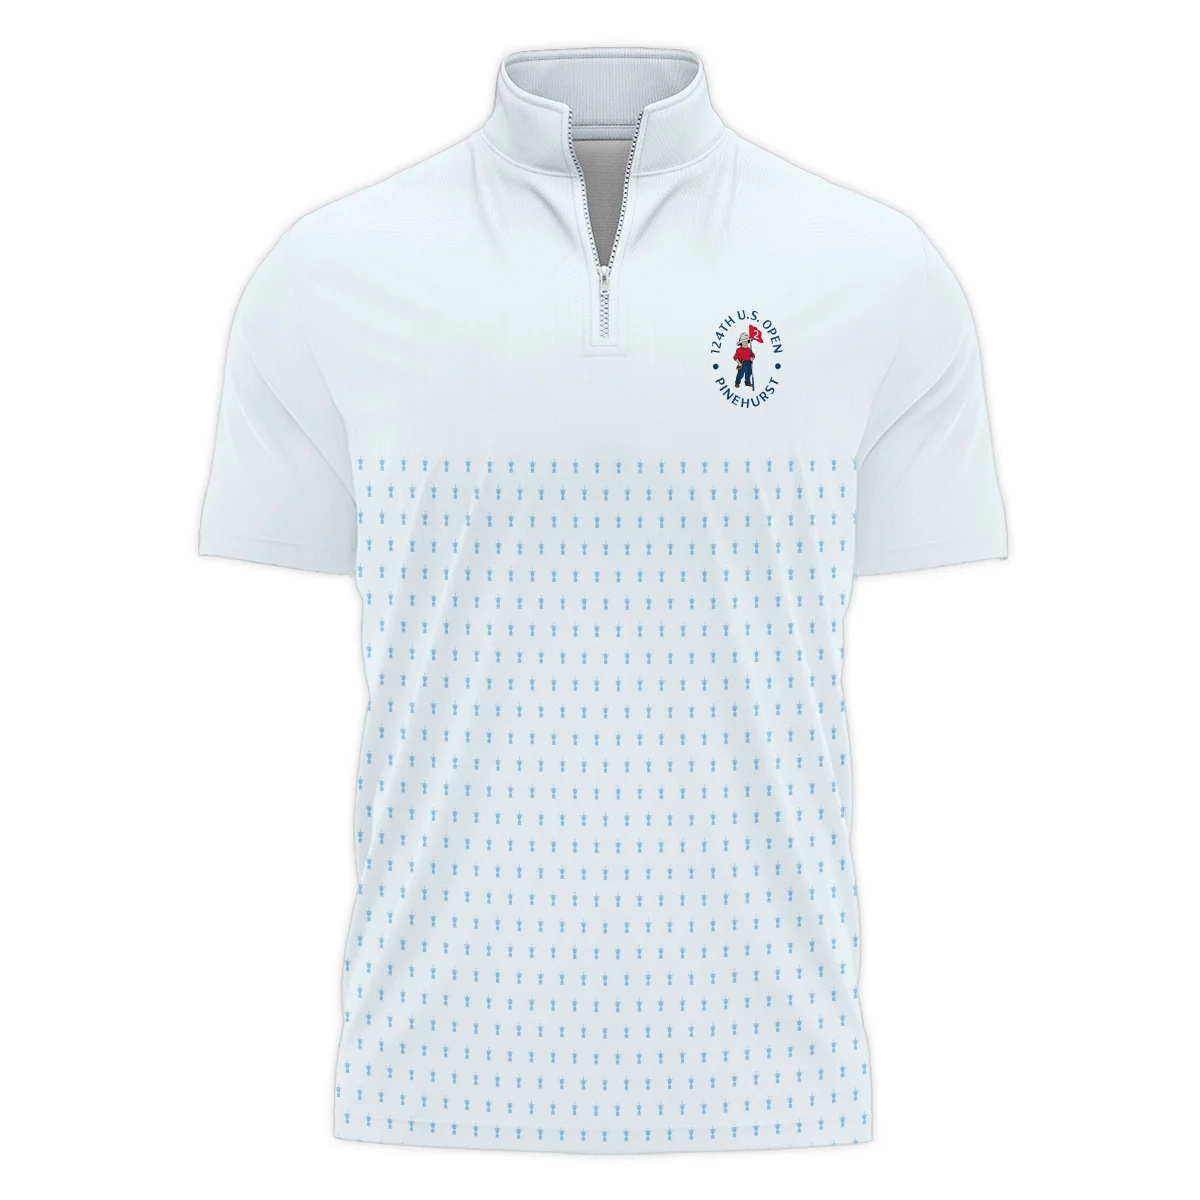 U.S Open Trophy Pattern Light Blue 124th U.S. Open Pinehurst Rolex Polo Shirt Style Classic Polo Shirt For Men